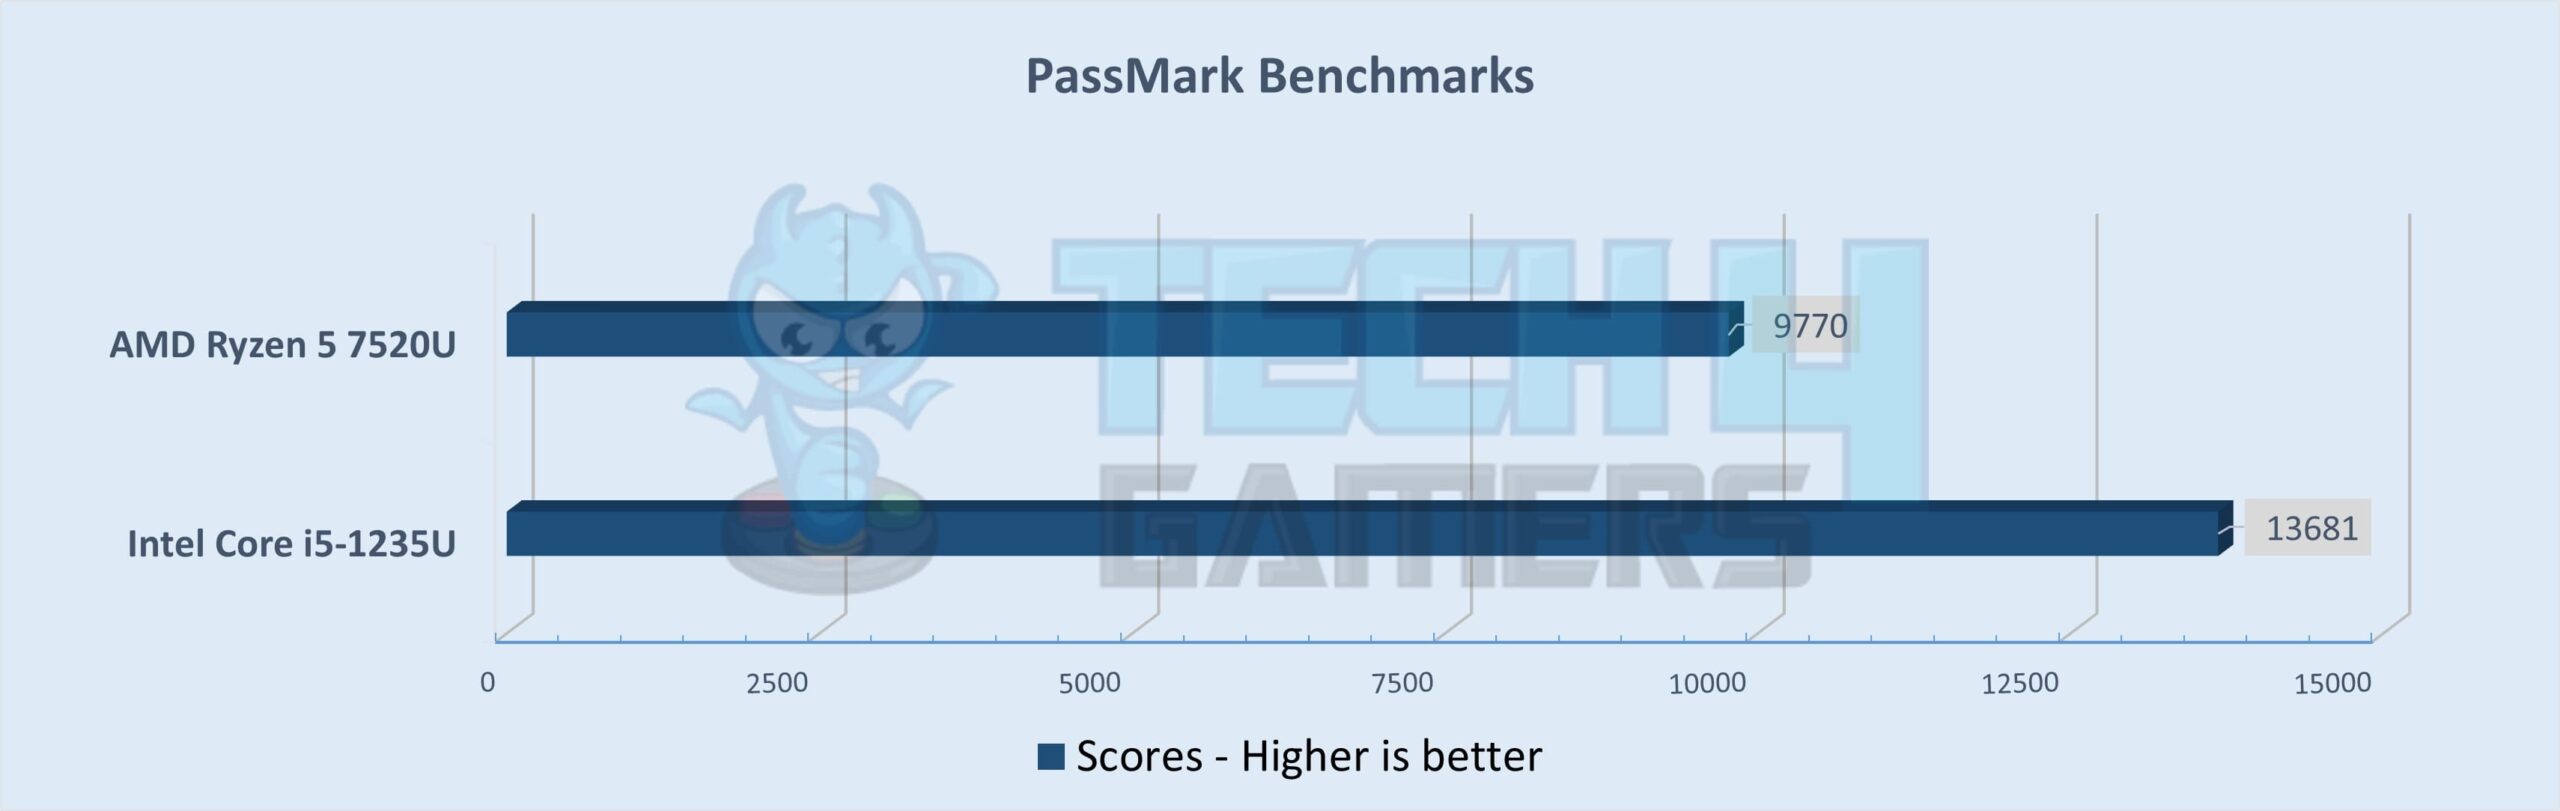 PassMark Benchmarks